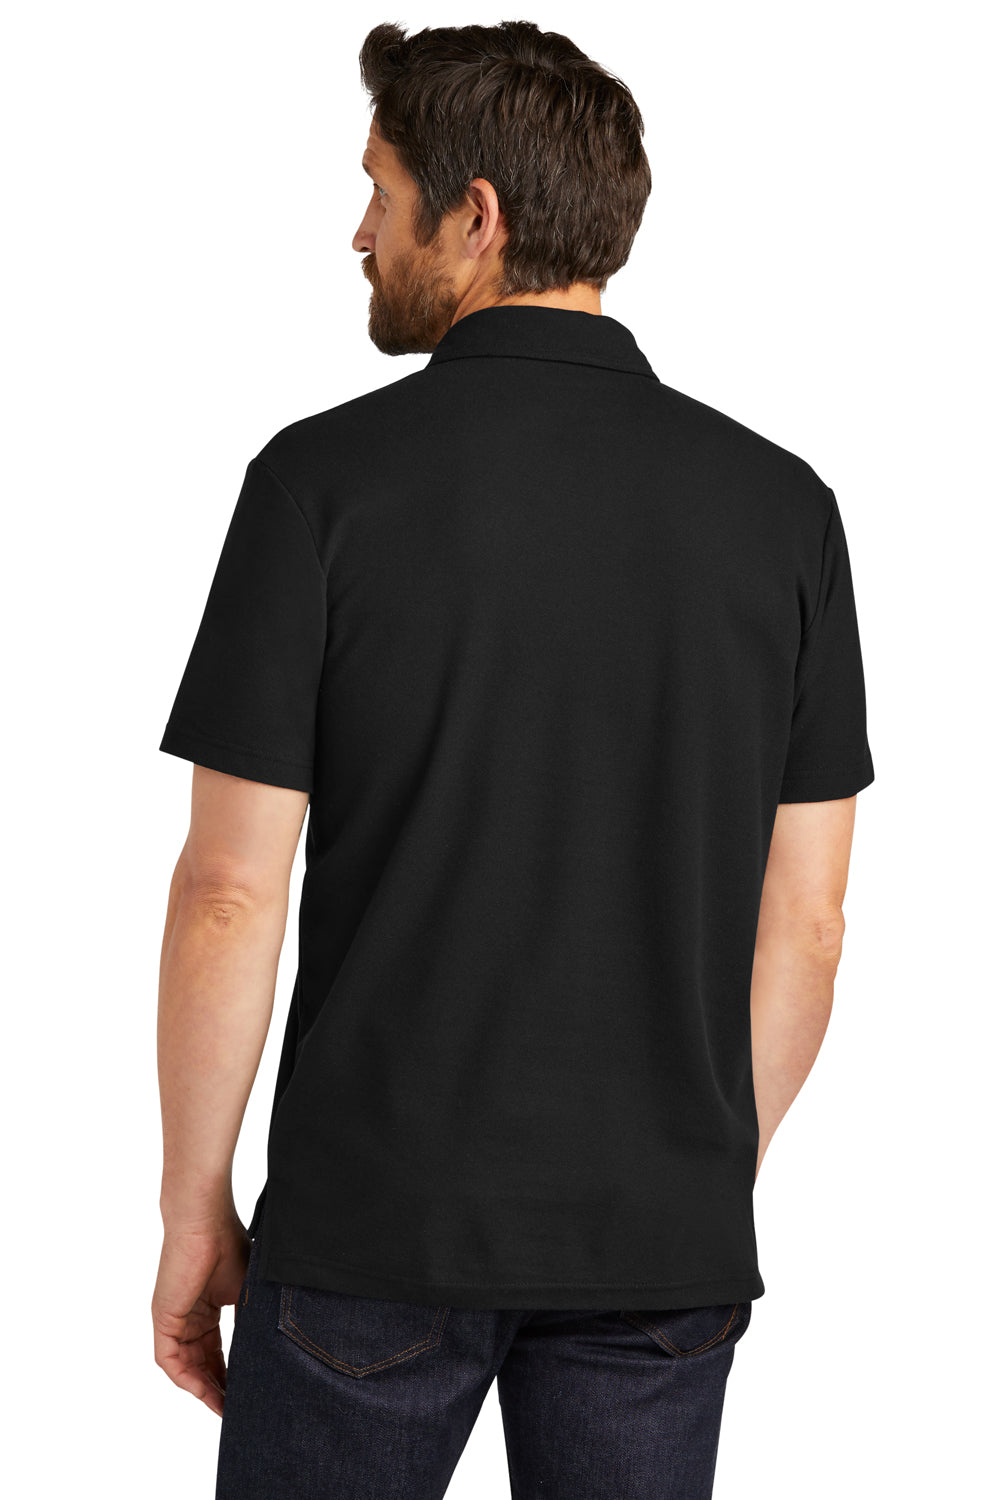 Port Authority K868 Mens C-FREE Pique Short Sleeve Polo Shirt w/ Pocket Black Back